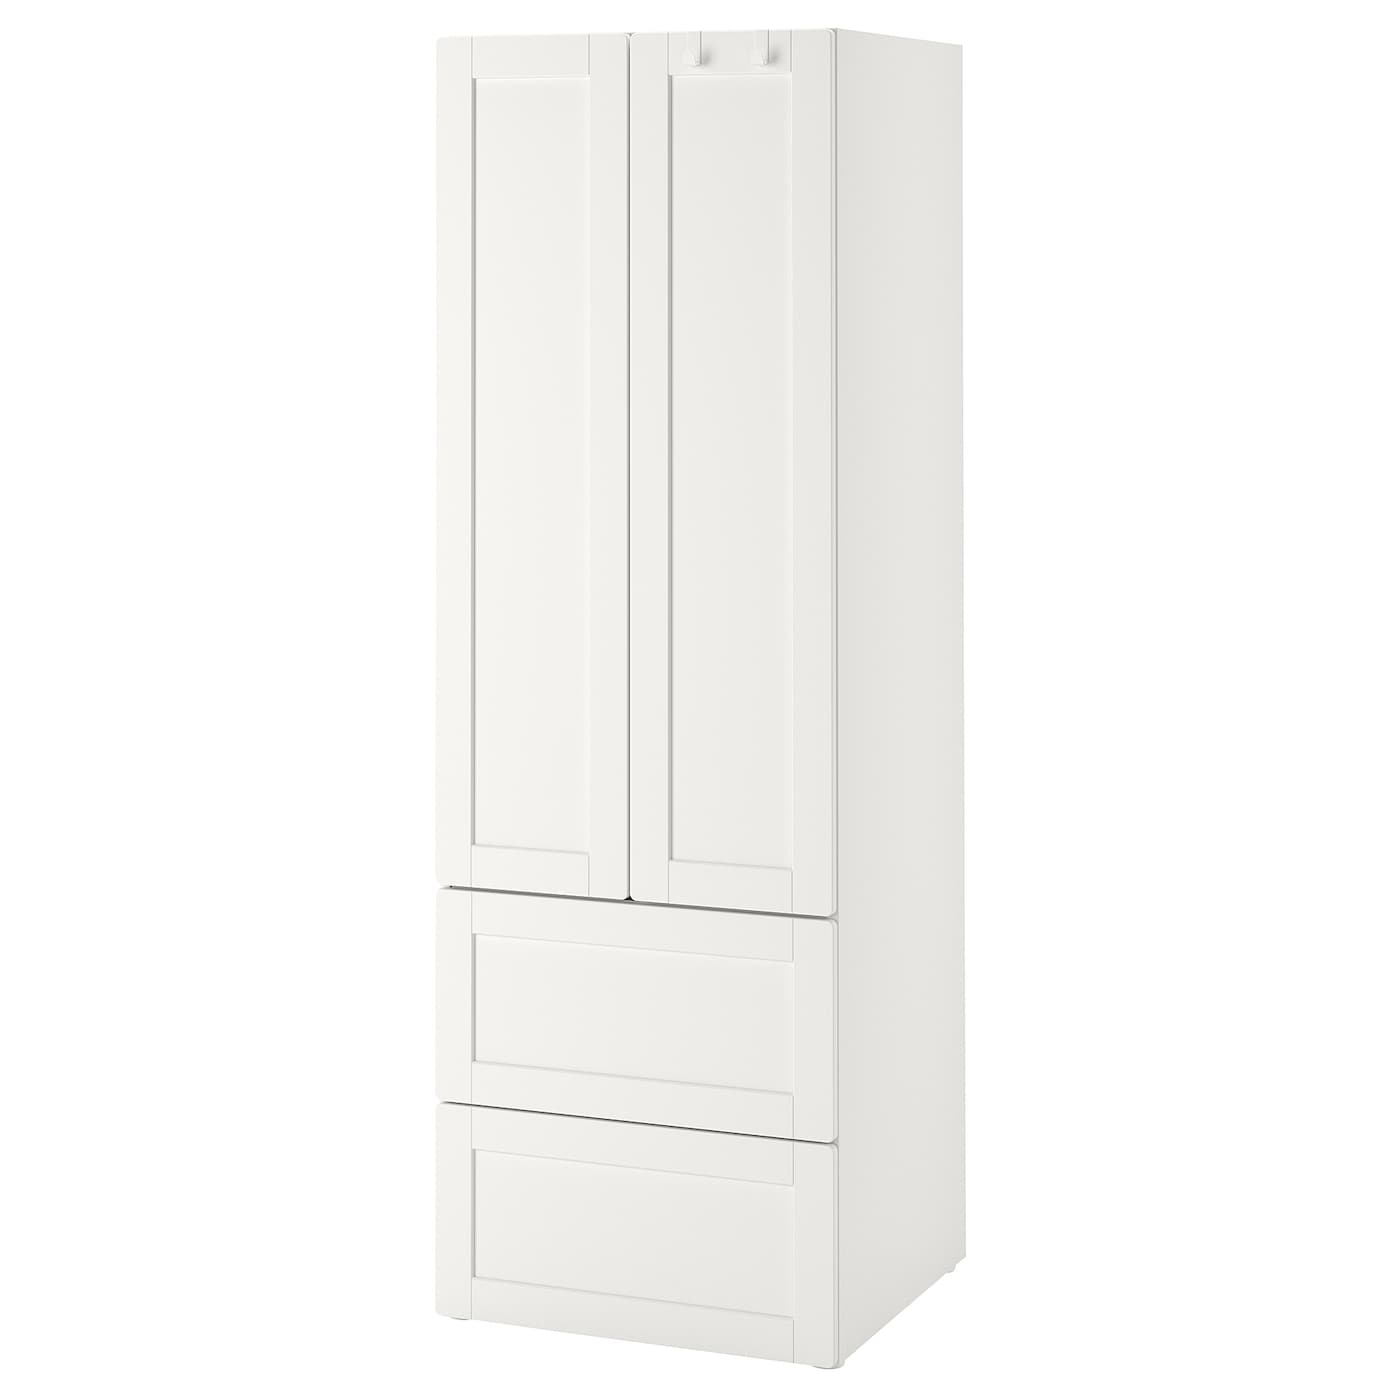 Шкаф - PLATSA/ SMÅSTAD / SMАSTAD  IKEA/ ПЛАТСА/СМОСТАД  ИКЕА, 60x57x181 см, белый